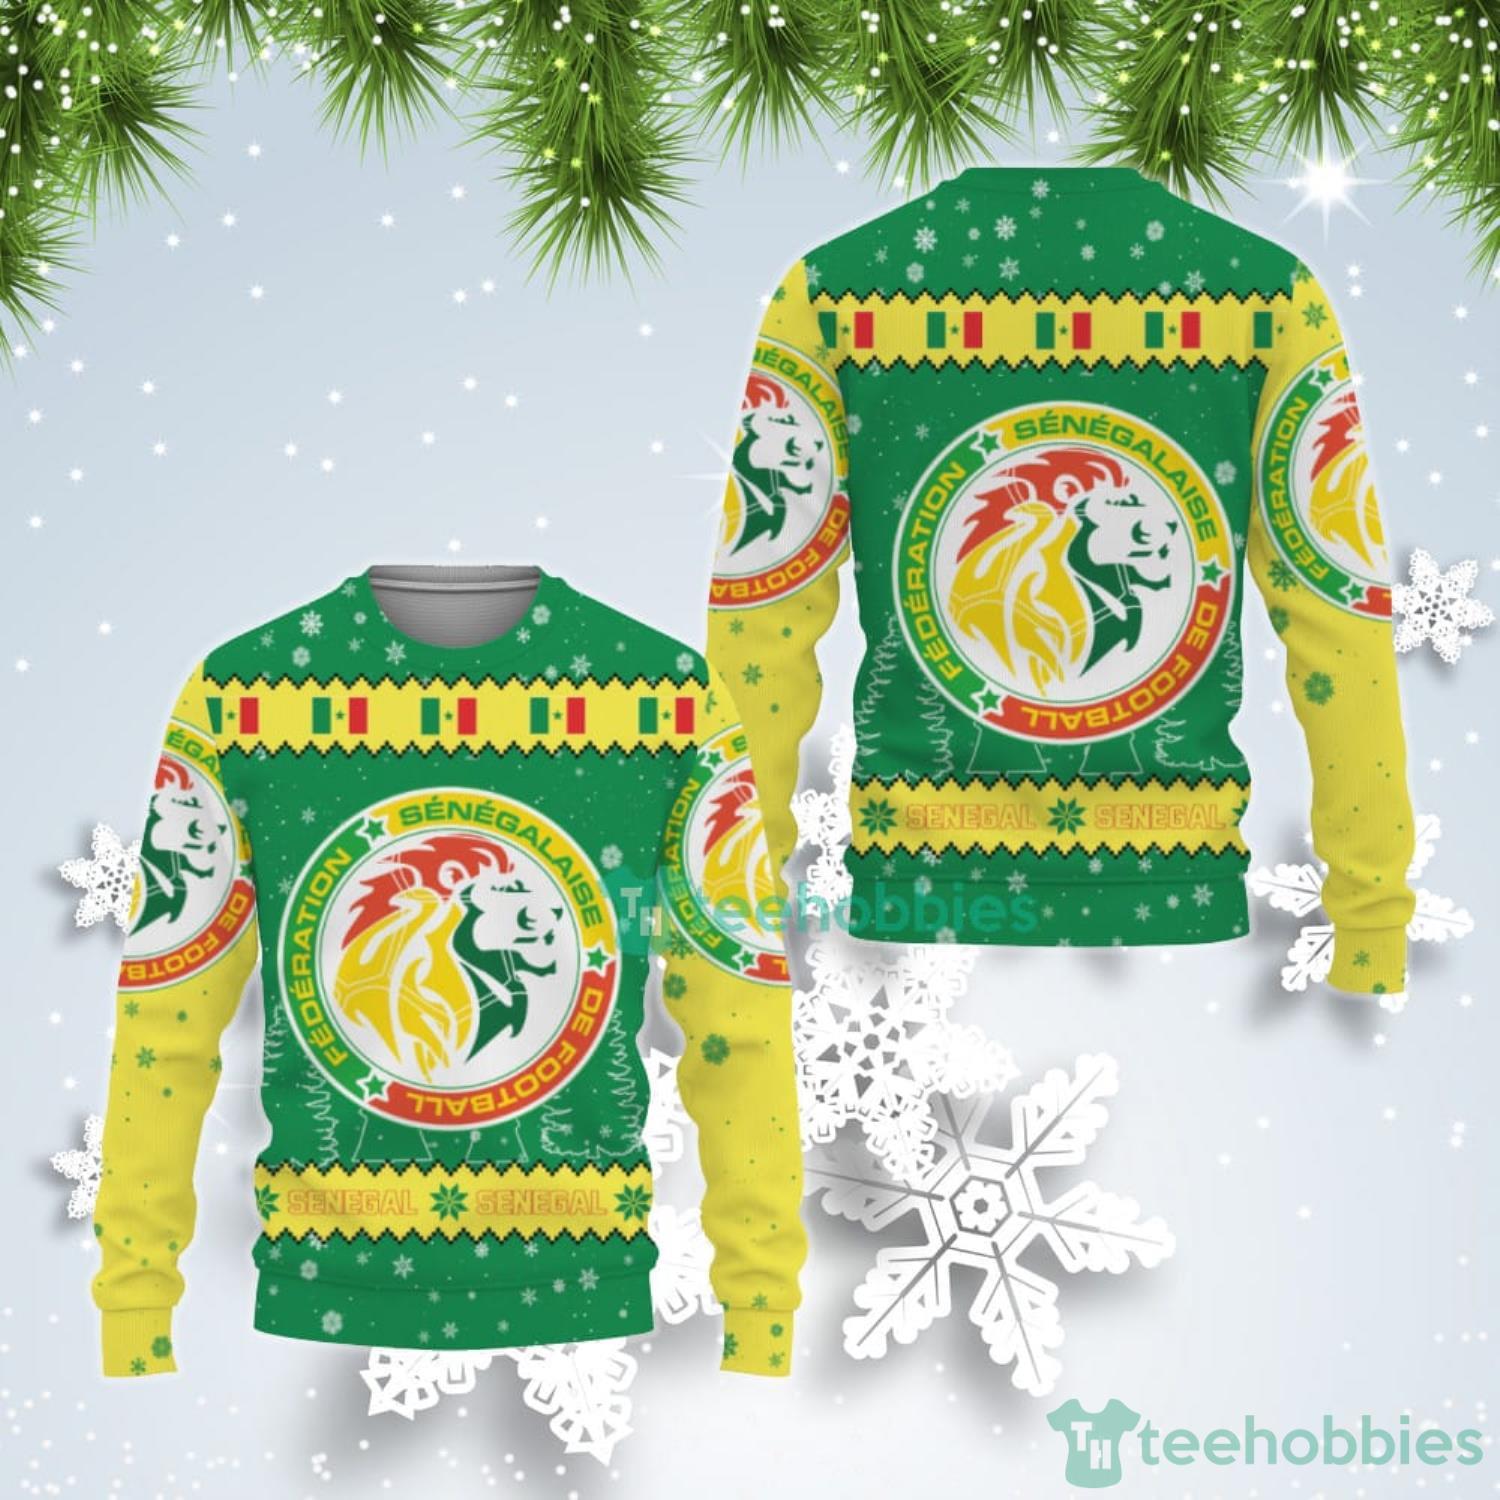 Senegal National Soccer Team Qatar World Cup 2022 Winter Season Ugly Christmas Sweater Product Photo 1